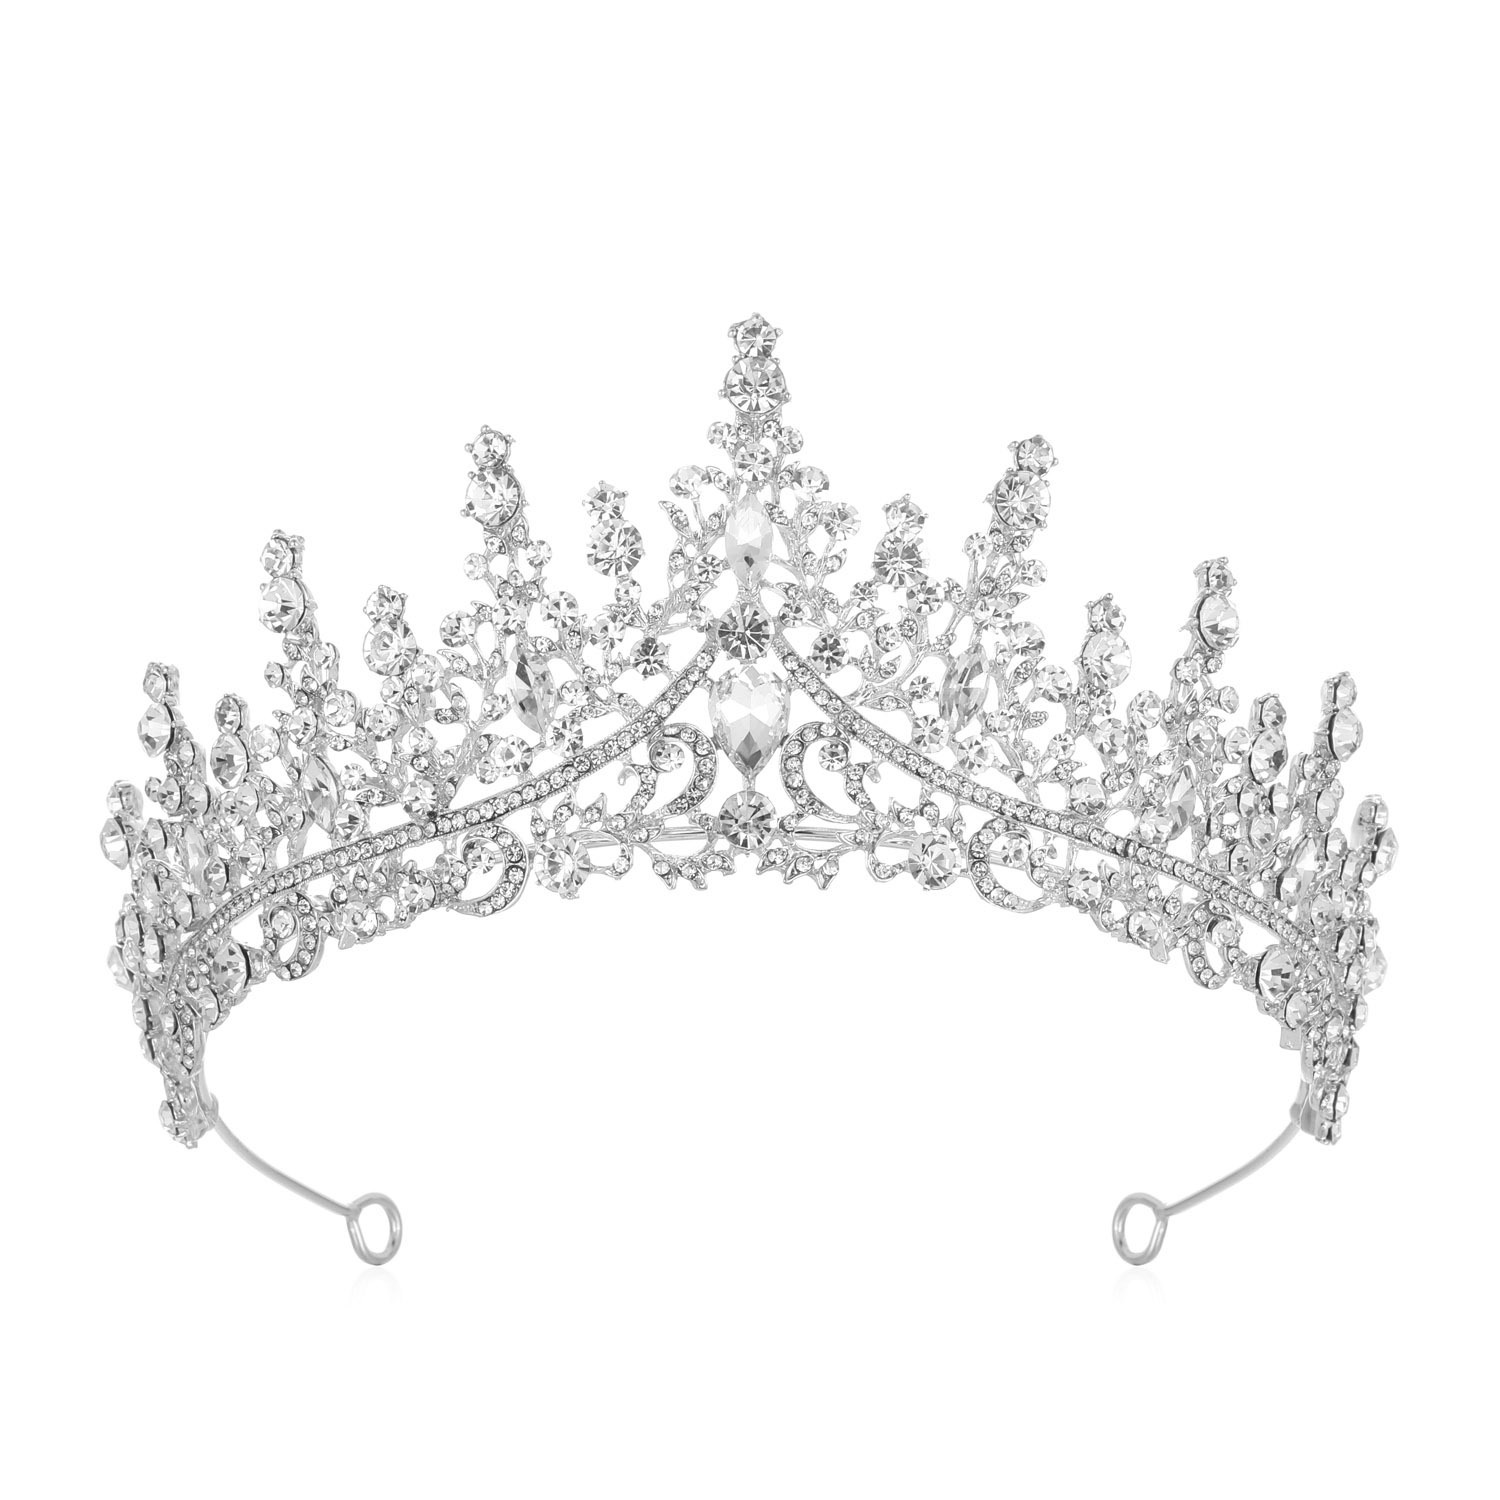 Elegant Royal Tiara - Perfect Evening & Wedding Headpiece Crown